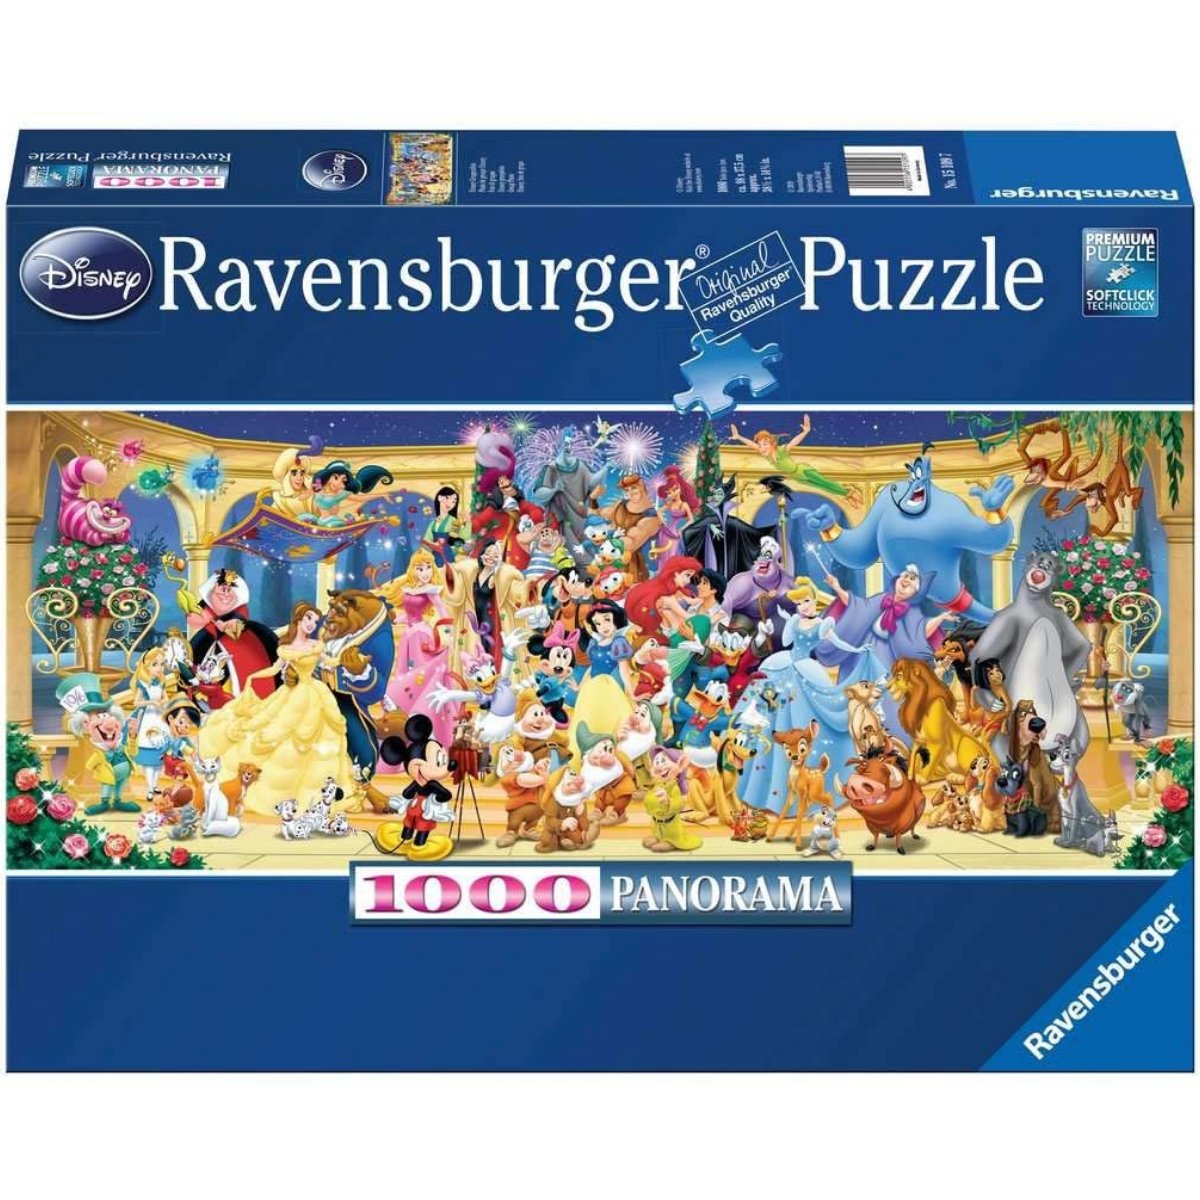 Ravensburger Disney Panoramic - 1000 Piece Jigsaw Puzzle - Phillips Hobbies